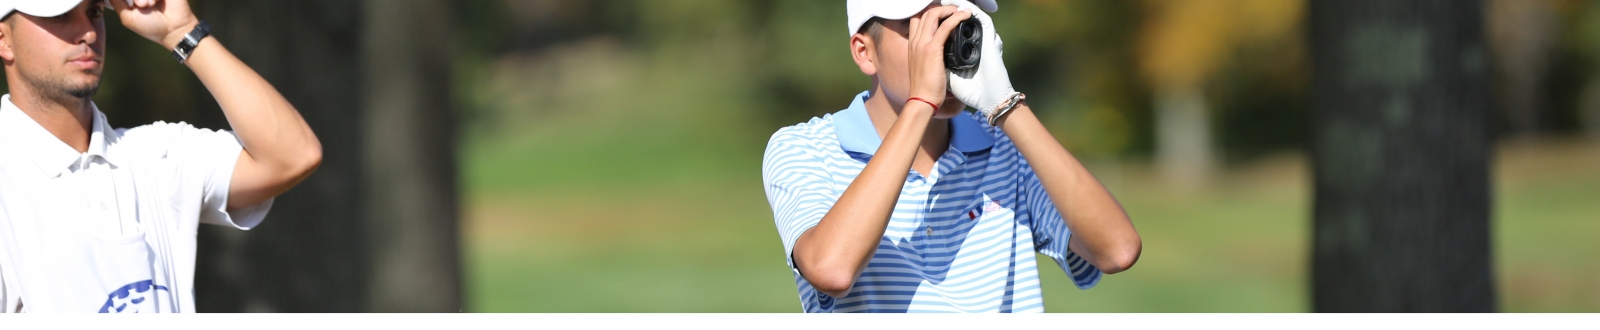 Golfer using range rinder